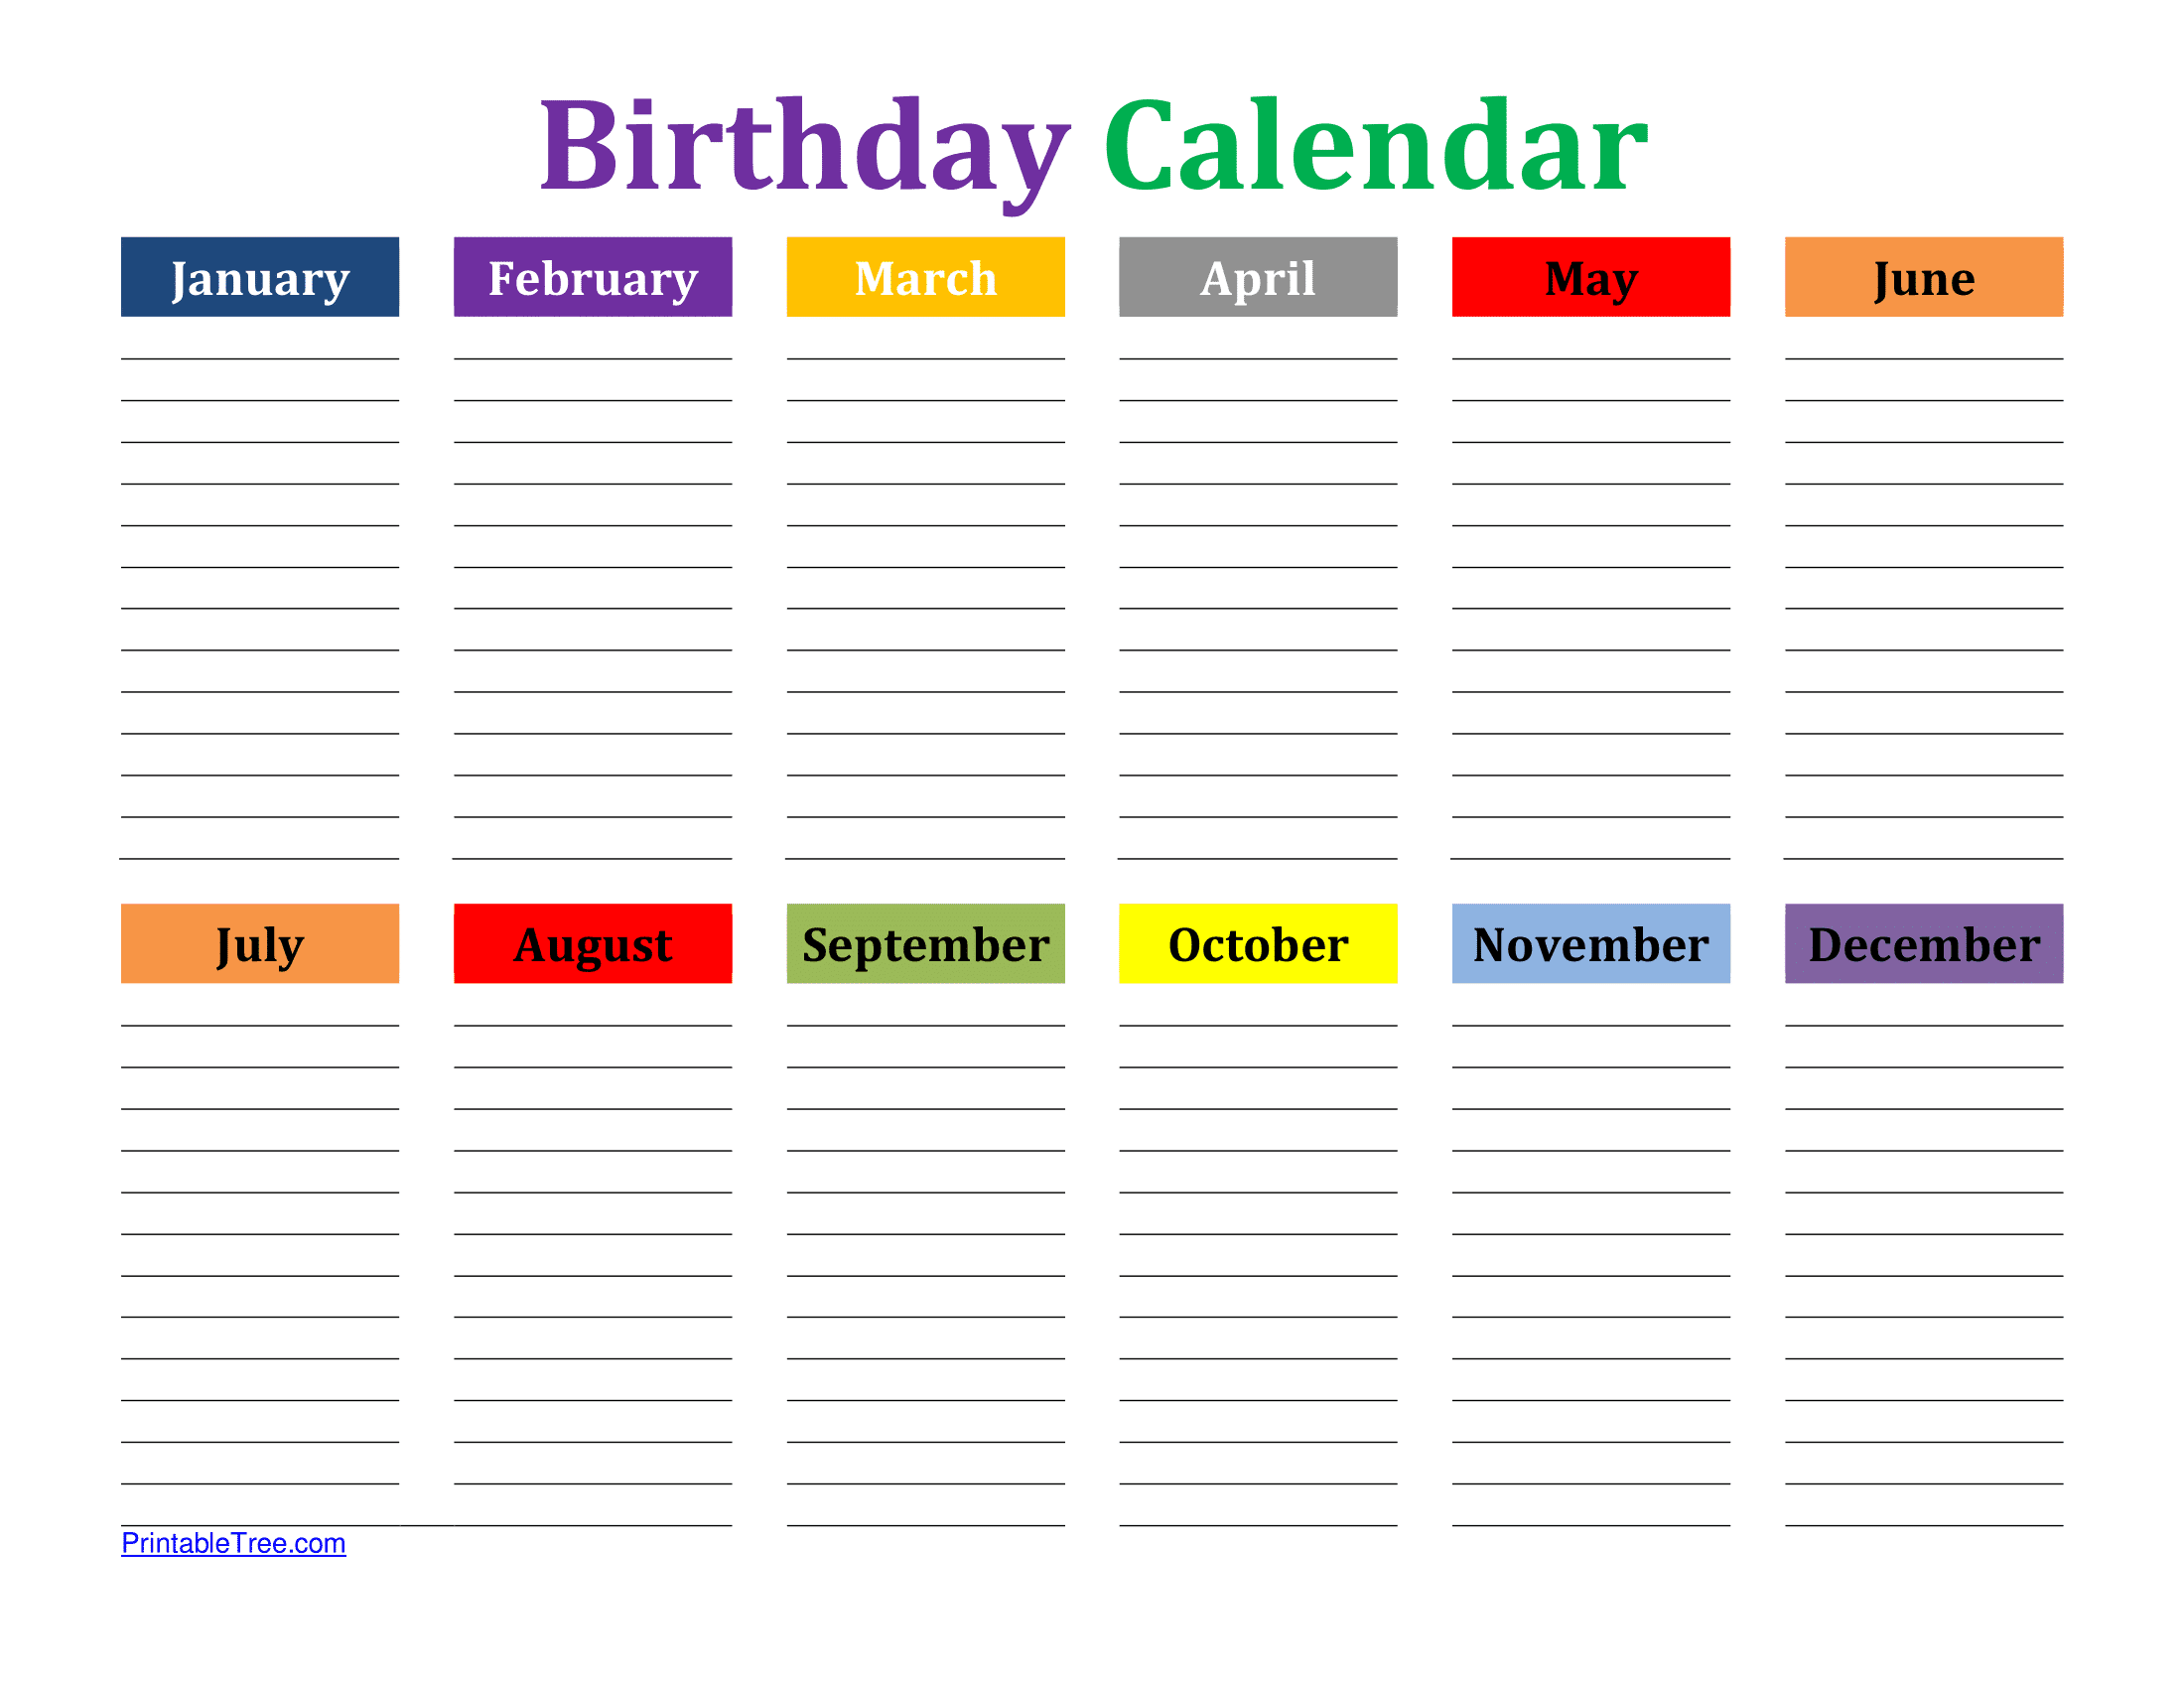 Free Birthday Calendar Printable PDF Templates - Printable Tree